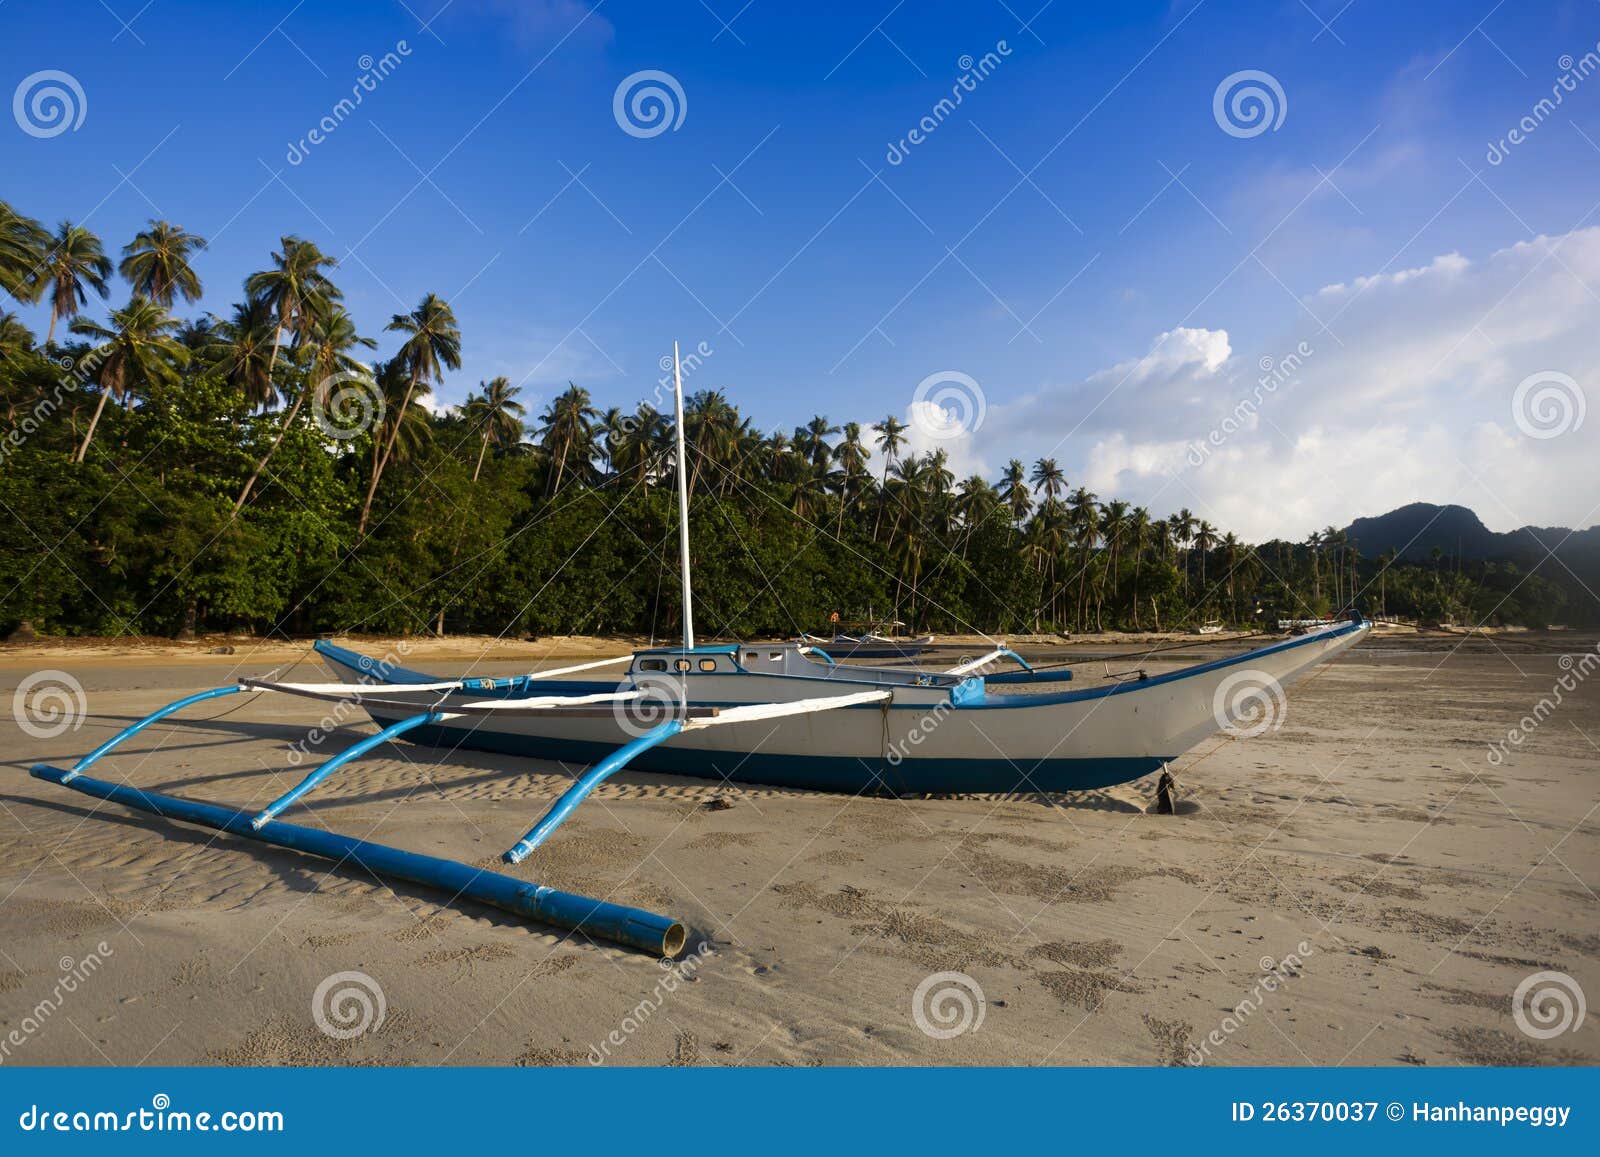 banca boat on the beach